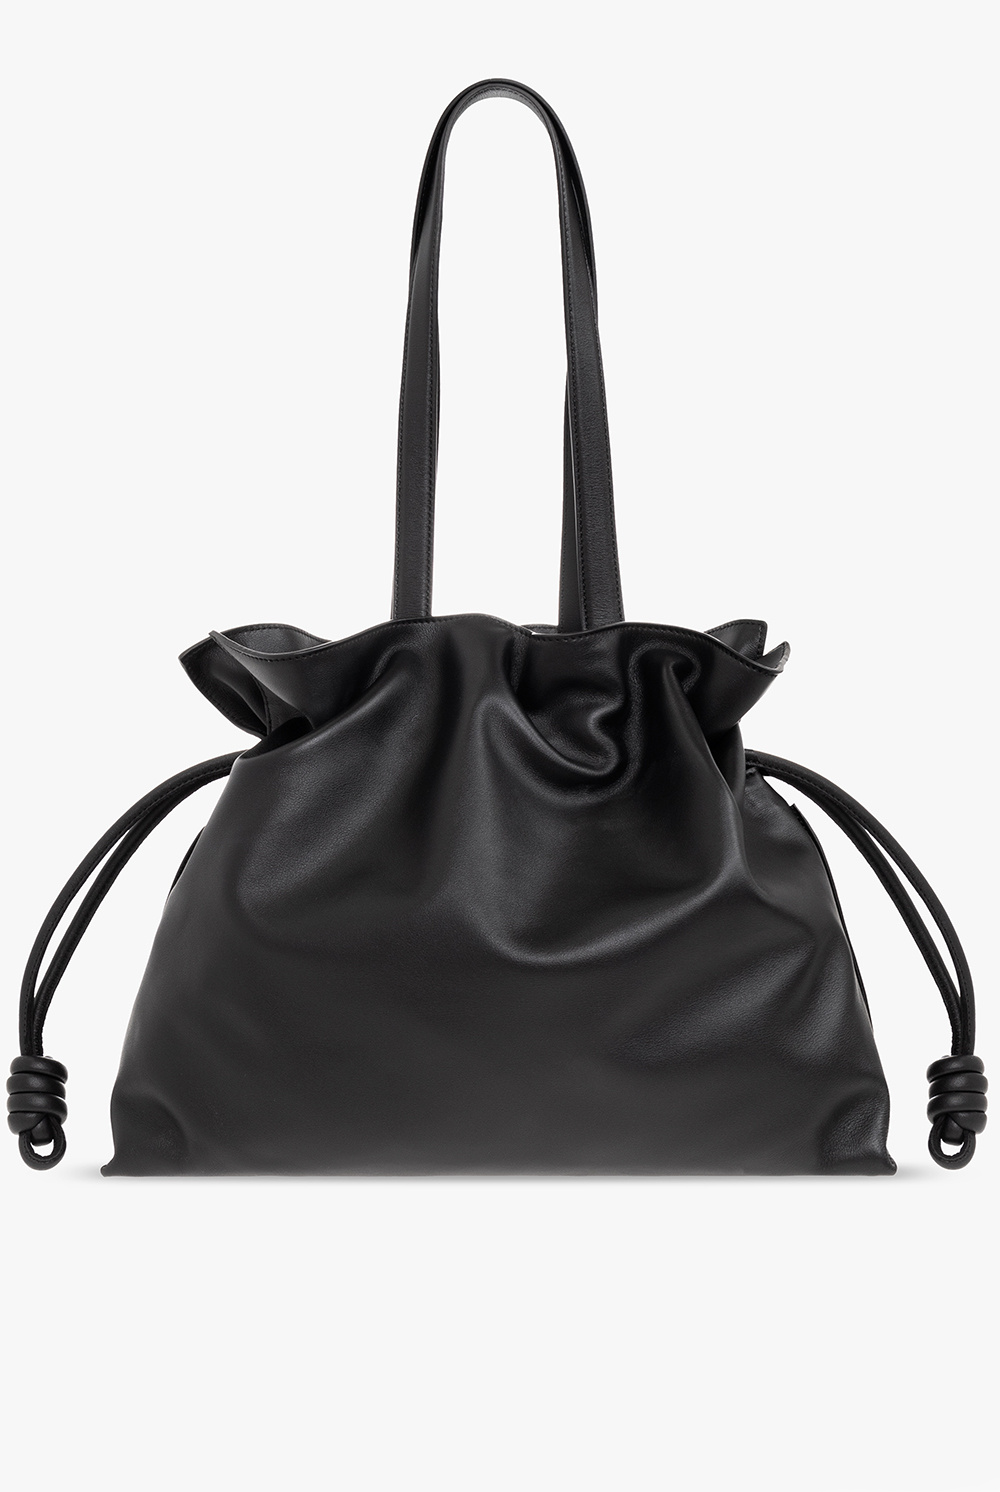 Loewe ‘Flamenco Large’ shopper bag